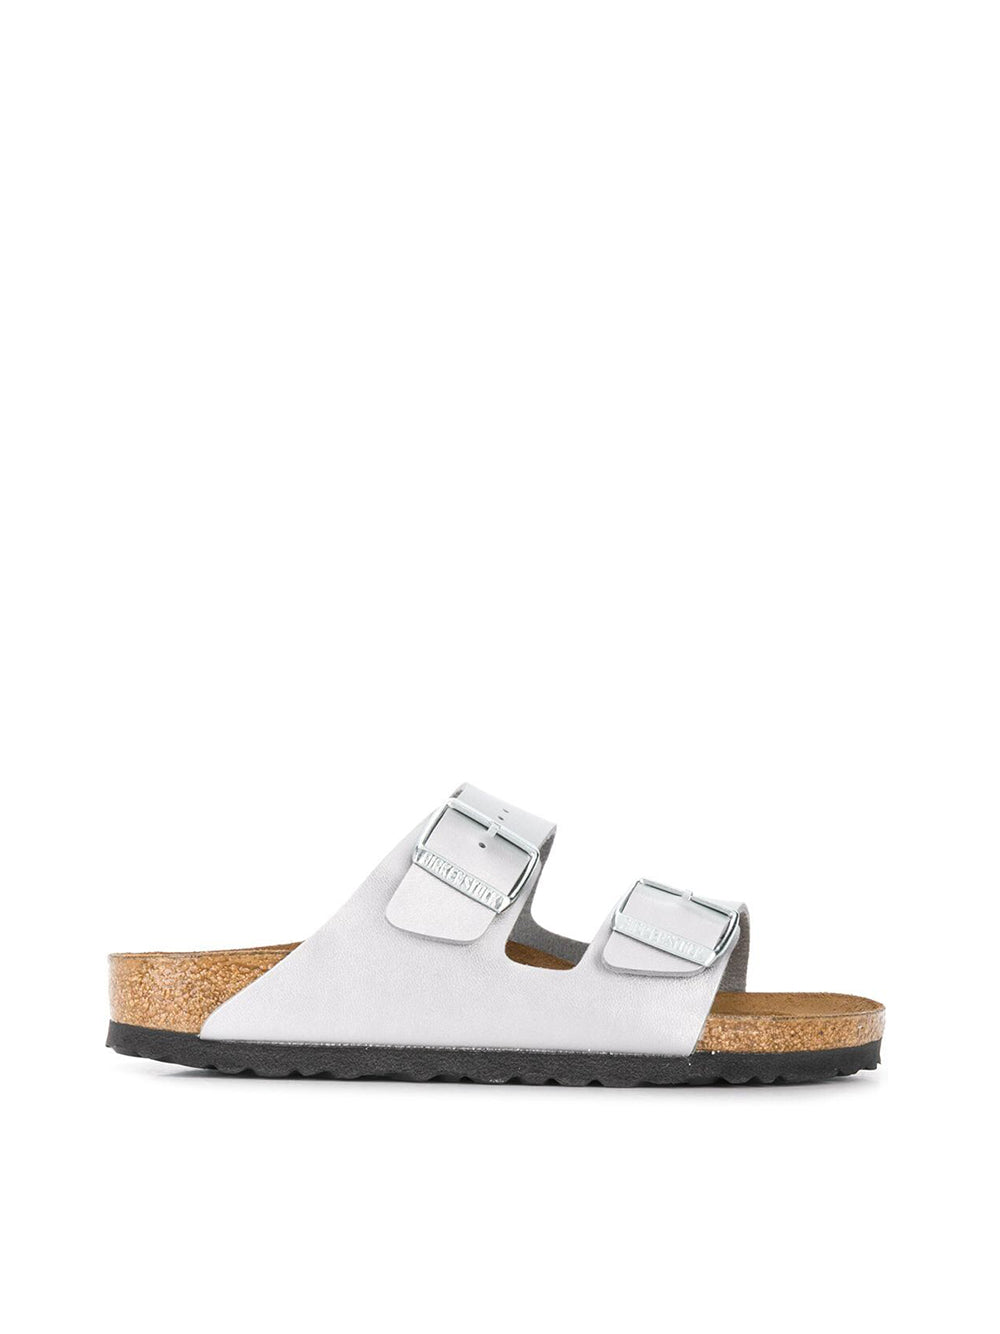 Arizona Birkibuc Silver Sandal